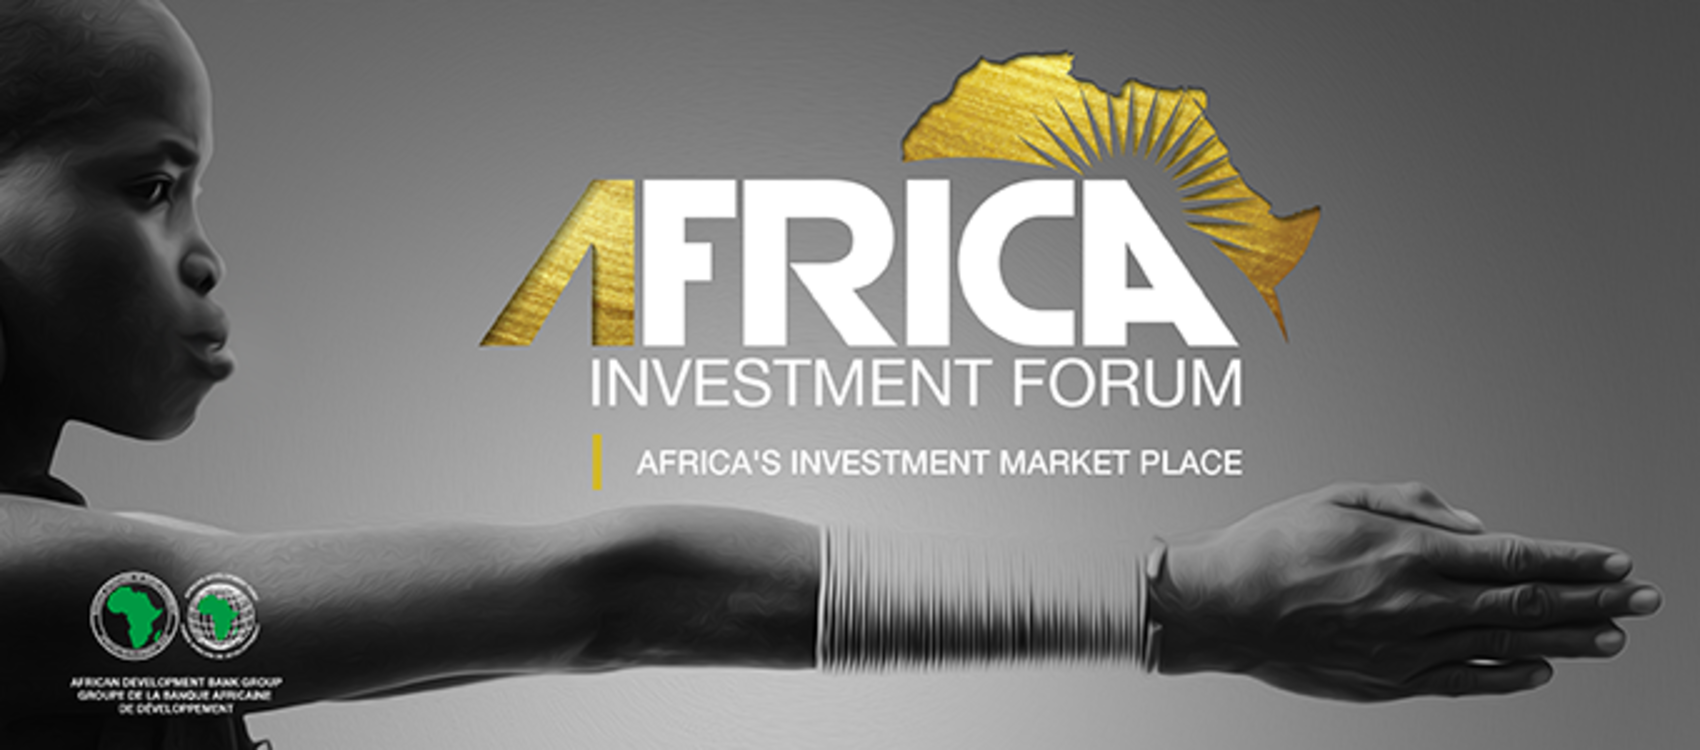 Africa Investment Forum kicks off in Abidjan